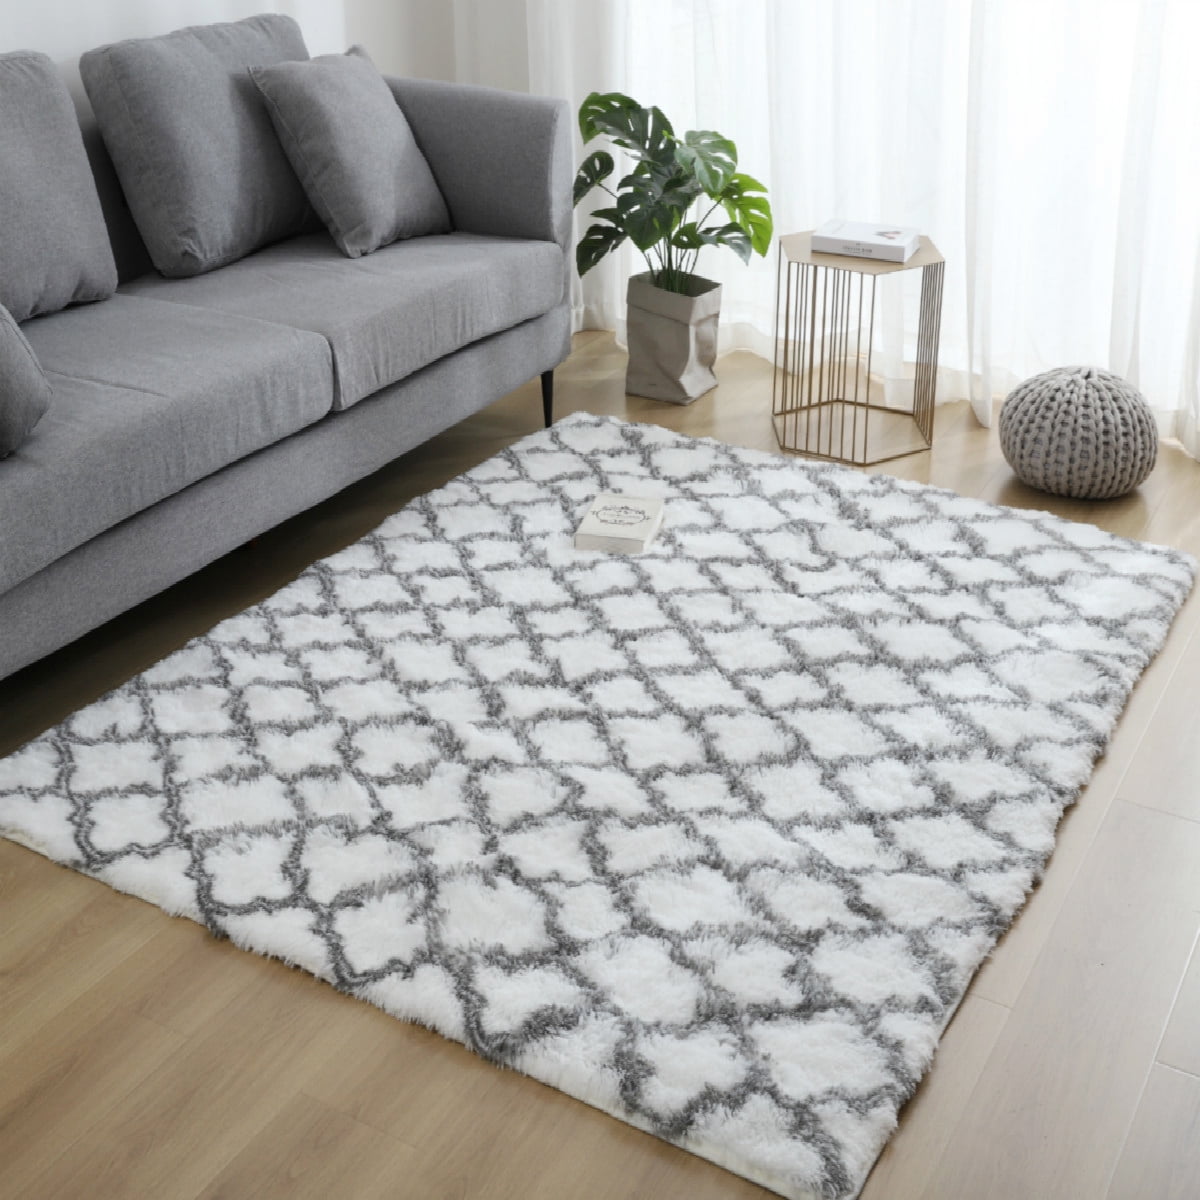 Beige 60x110 cm Fluffy Anti-Skid Thick Plain Soft Shaggy Living Room Rug Bedroom Home Floor Rugs